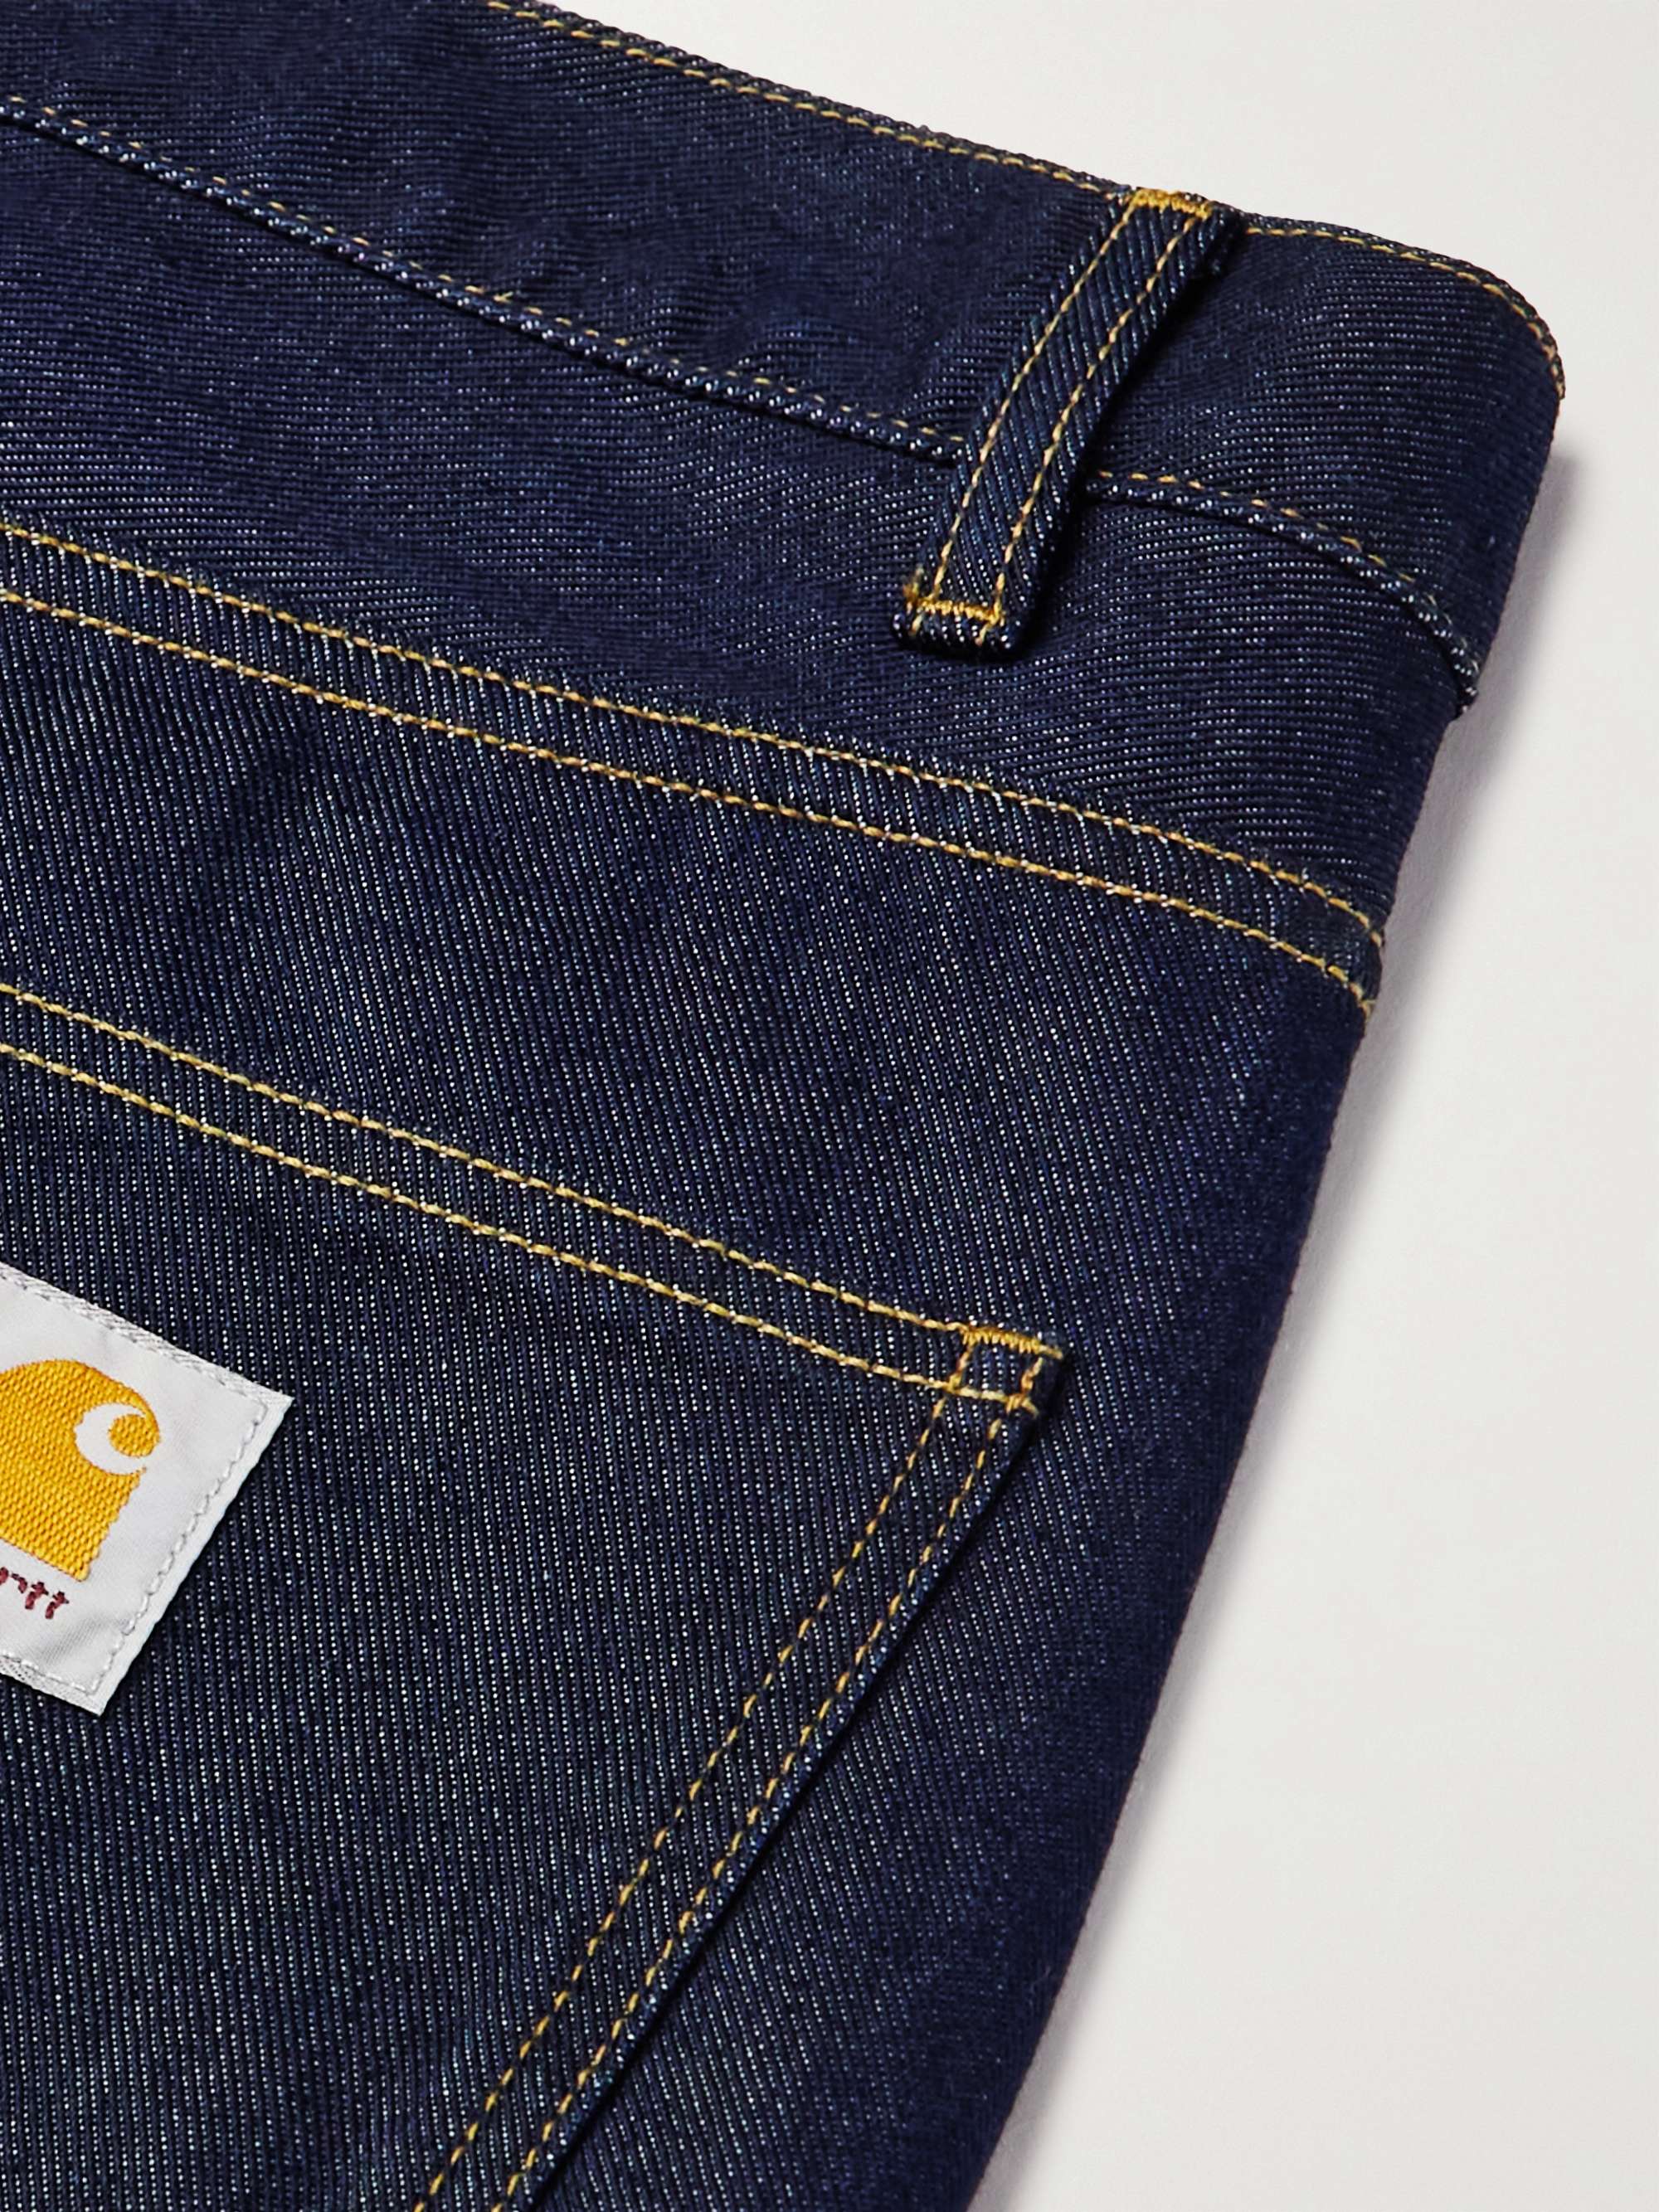 CARHARTT WIP Newel Tapered Logo-Appliquéd Jeans